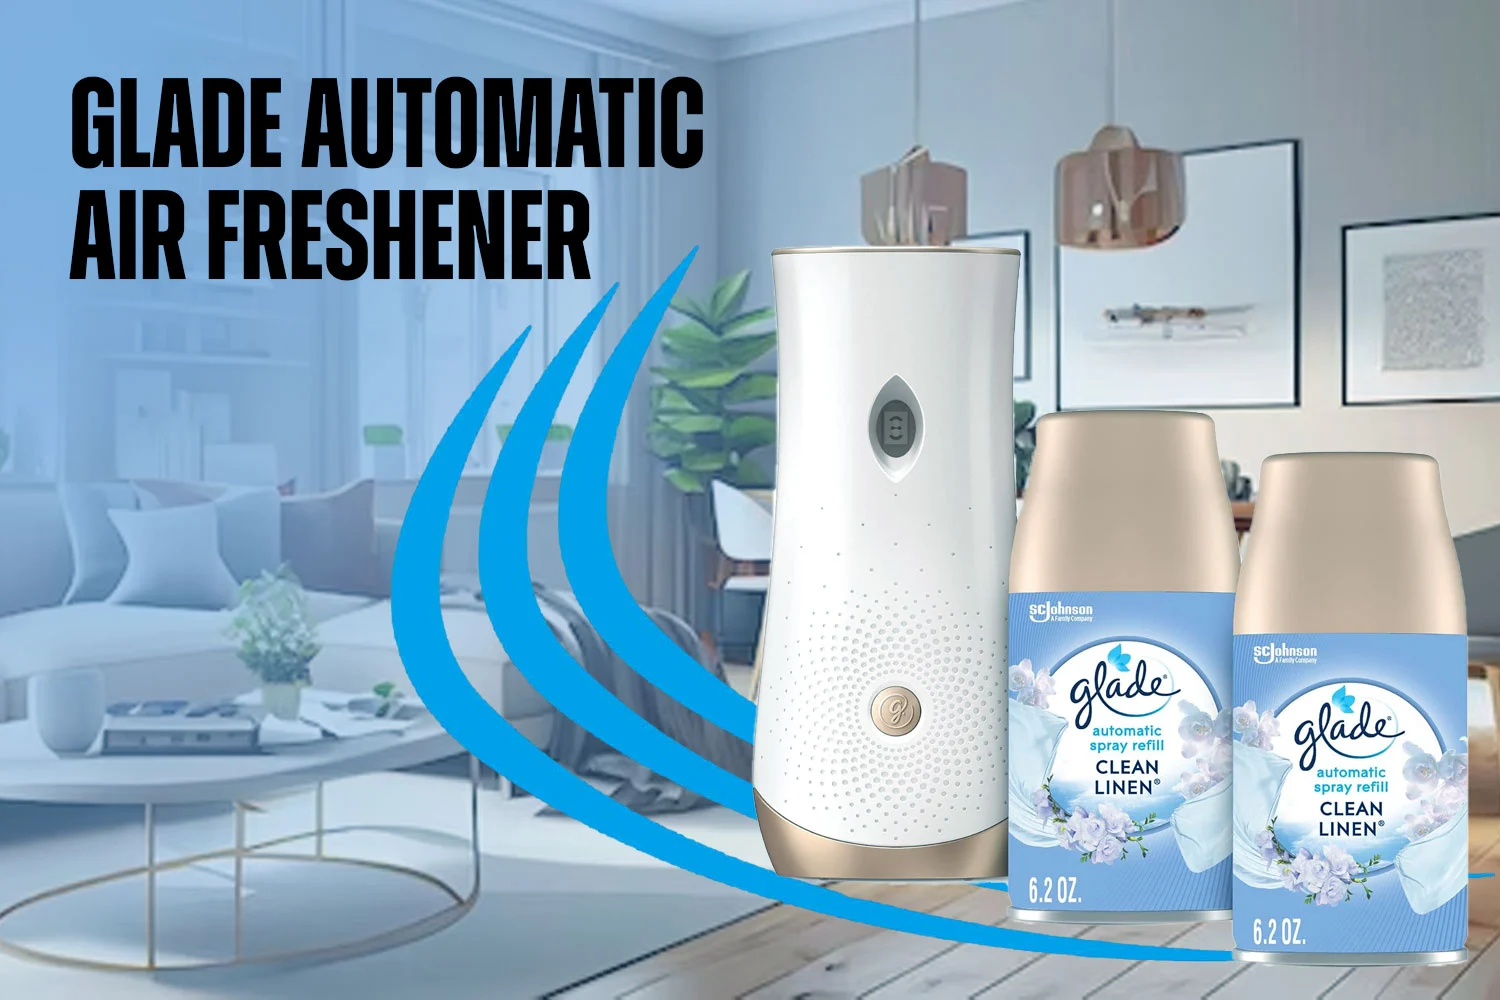 Glade Automatic Air Freshener